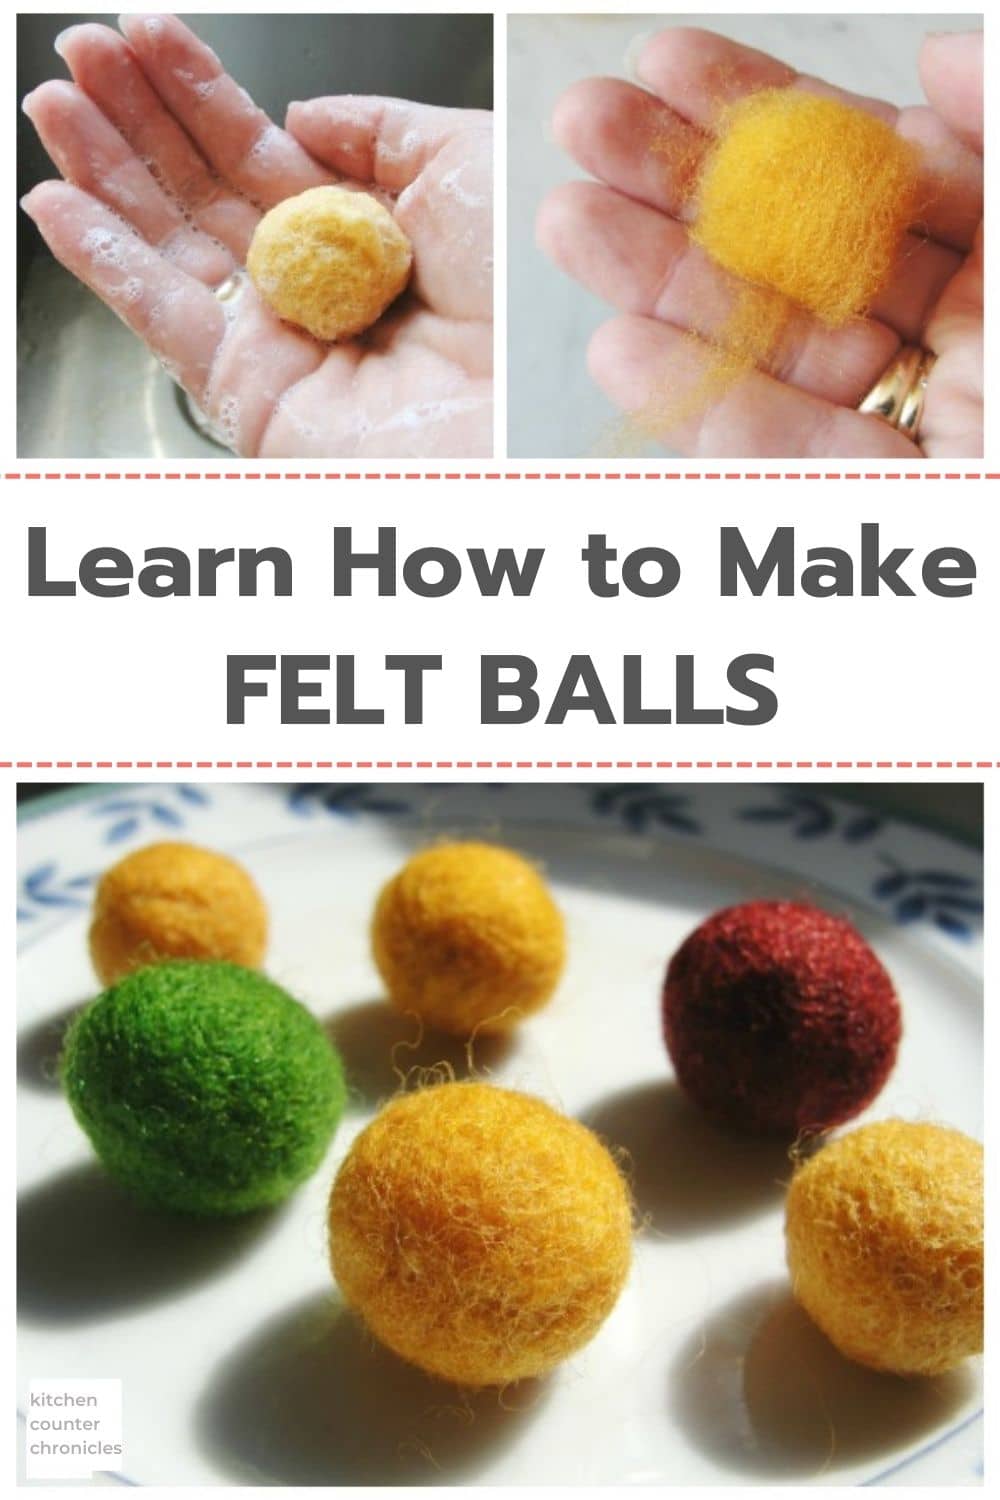 hands with felt and felt balls plate with felt balls and title how to make felt balls. title "Learn how to make felt balls"